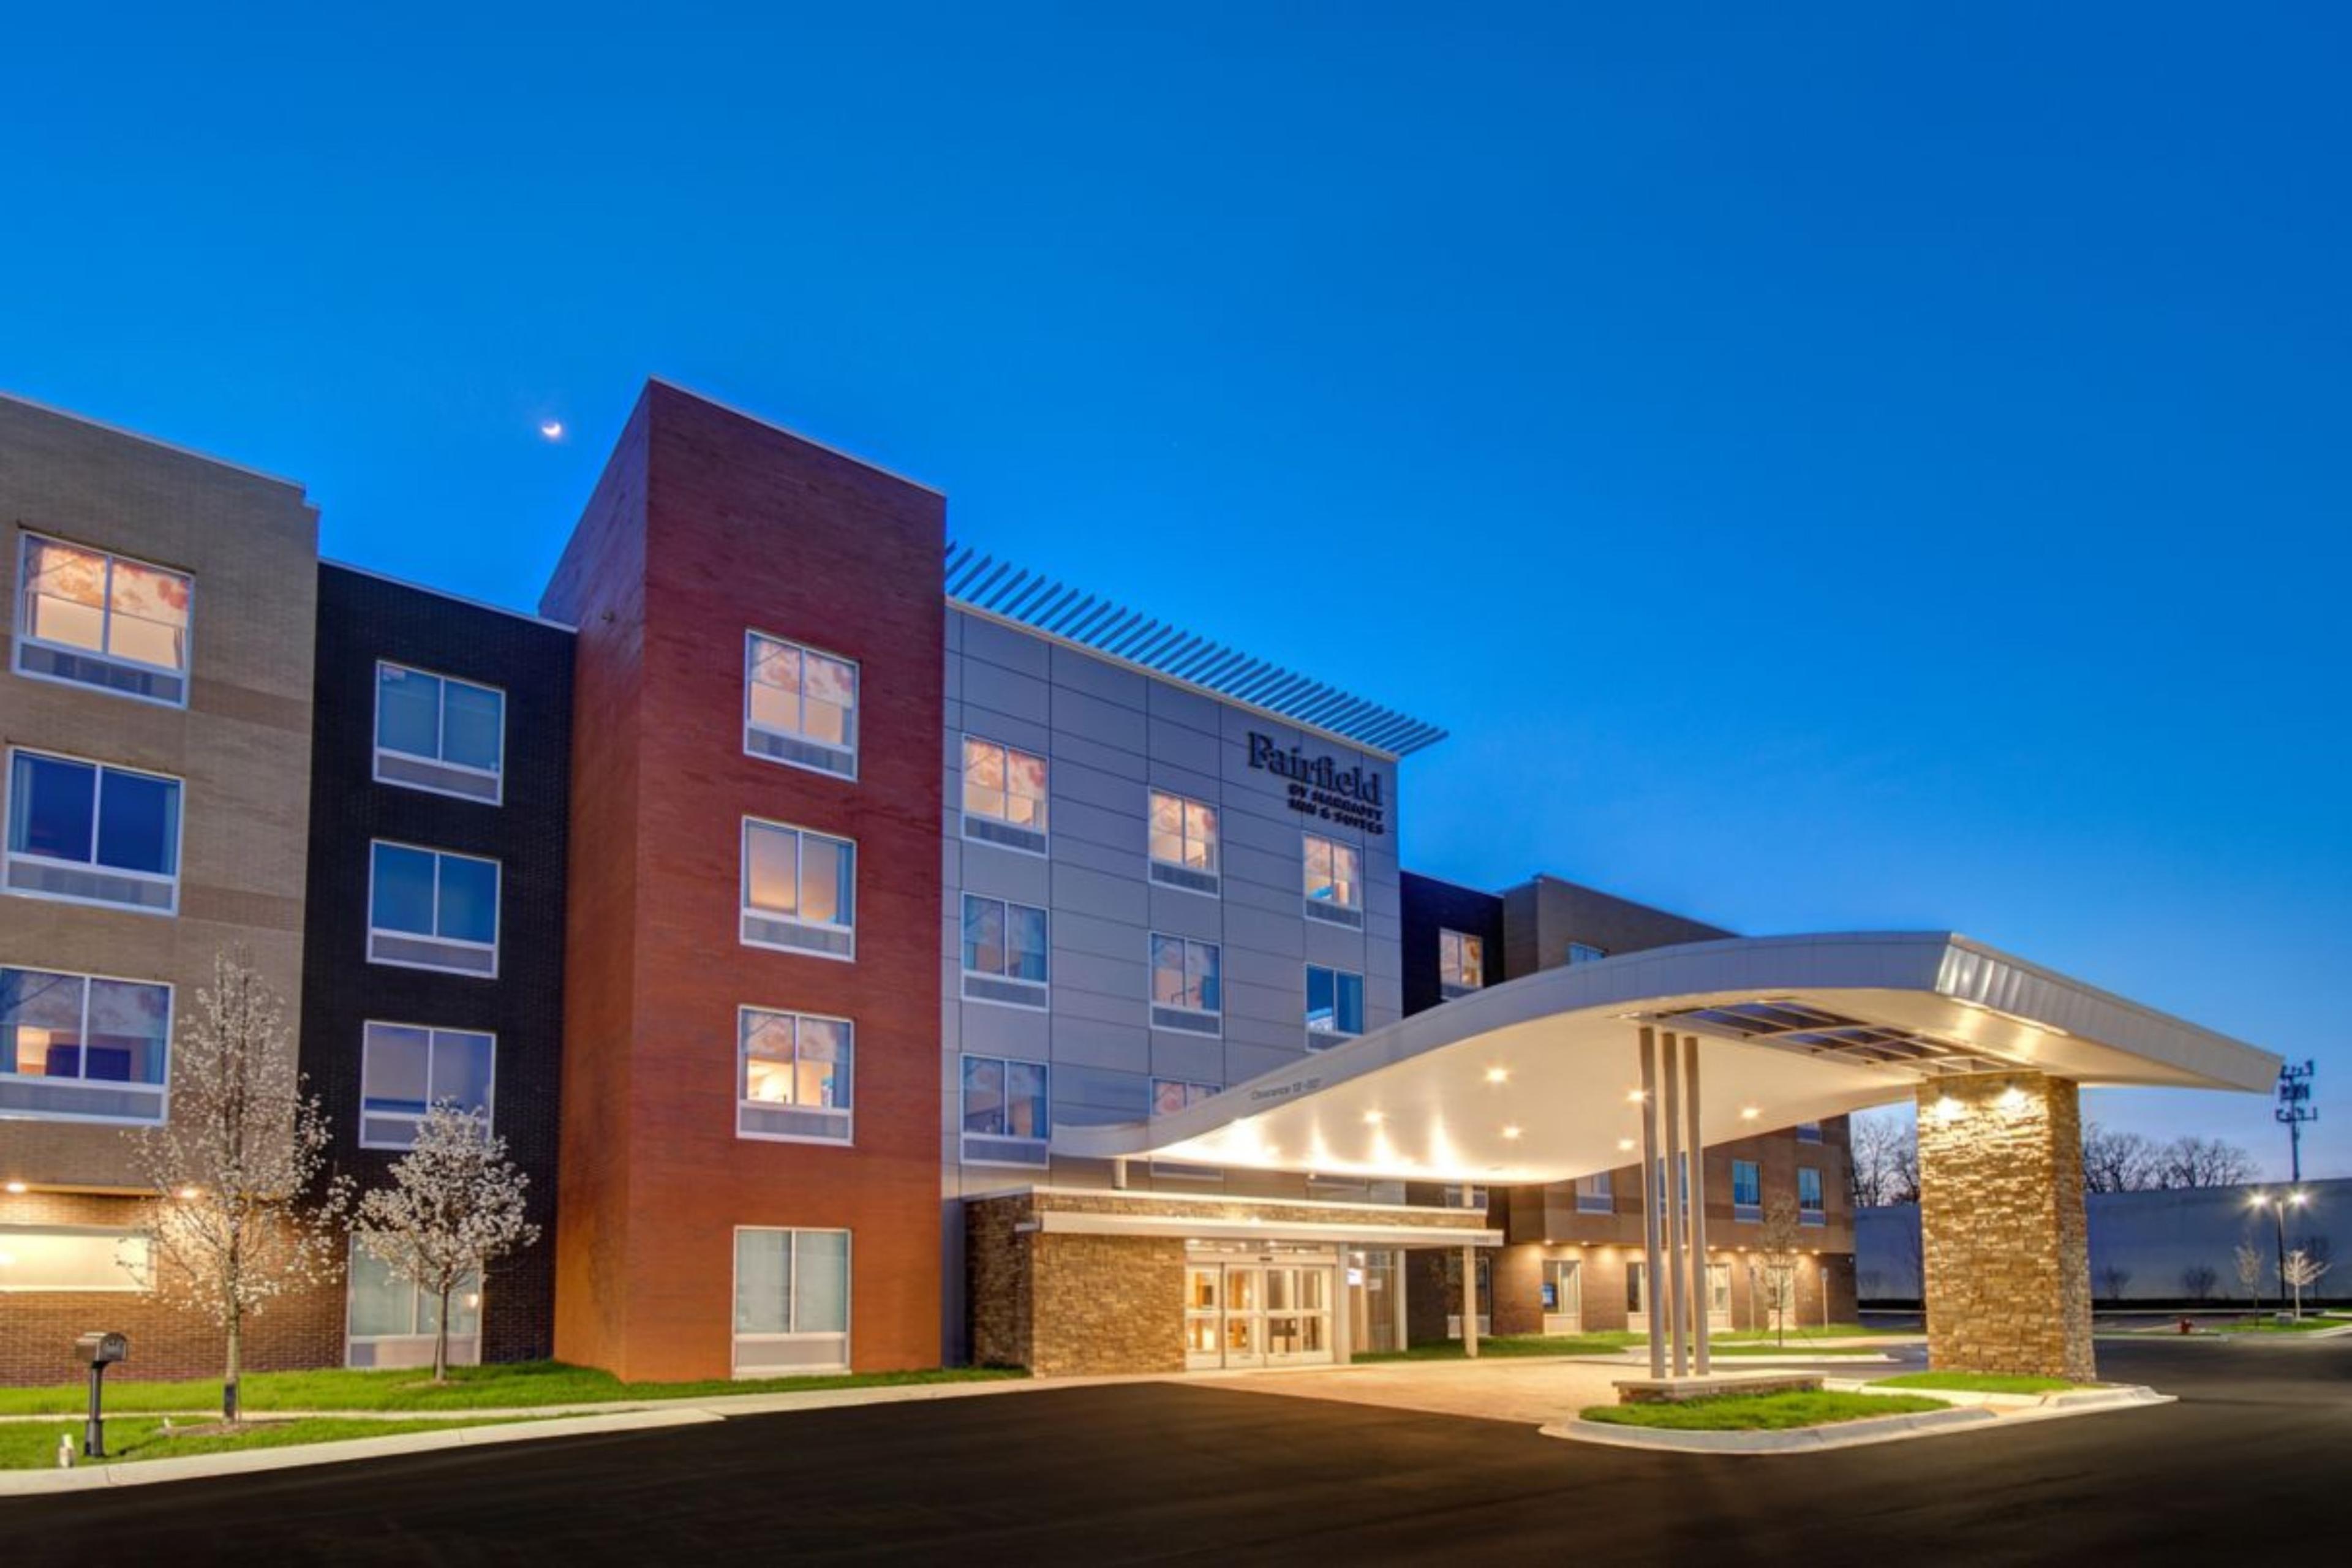 Fairfield Inn & Suites by Marriott Rochester Hills